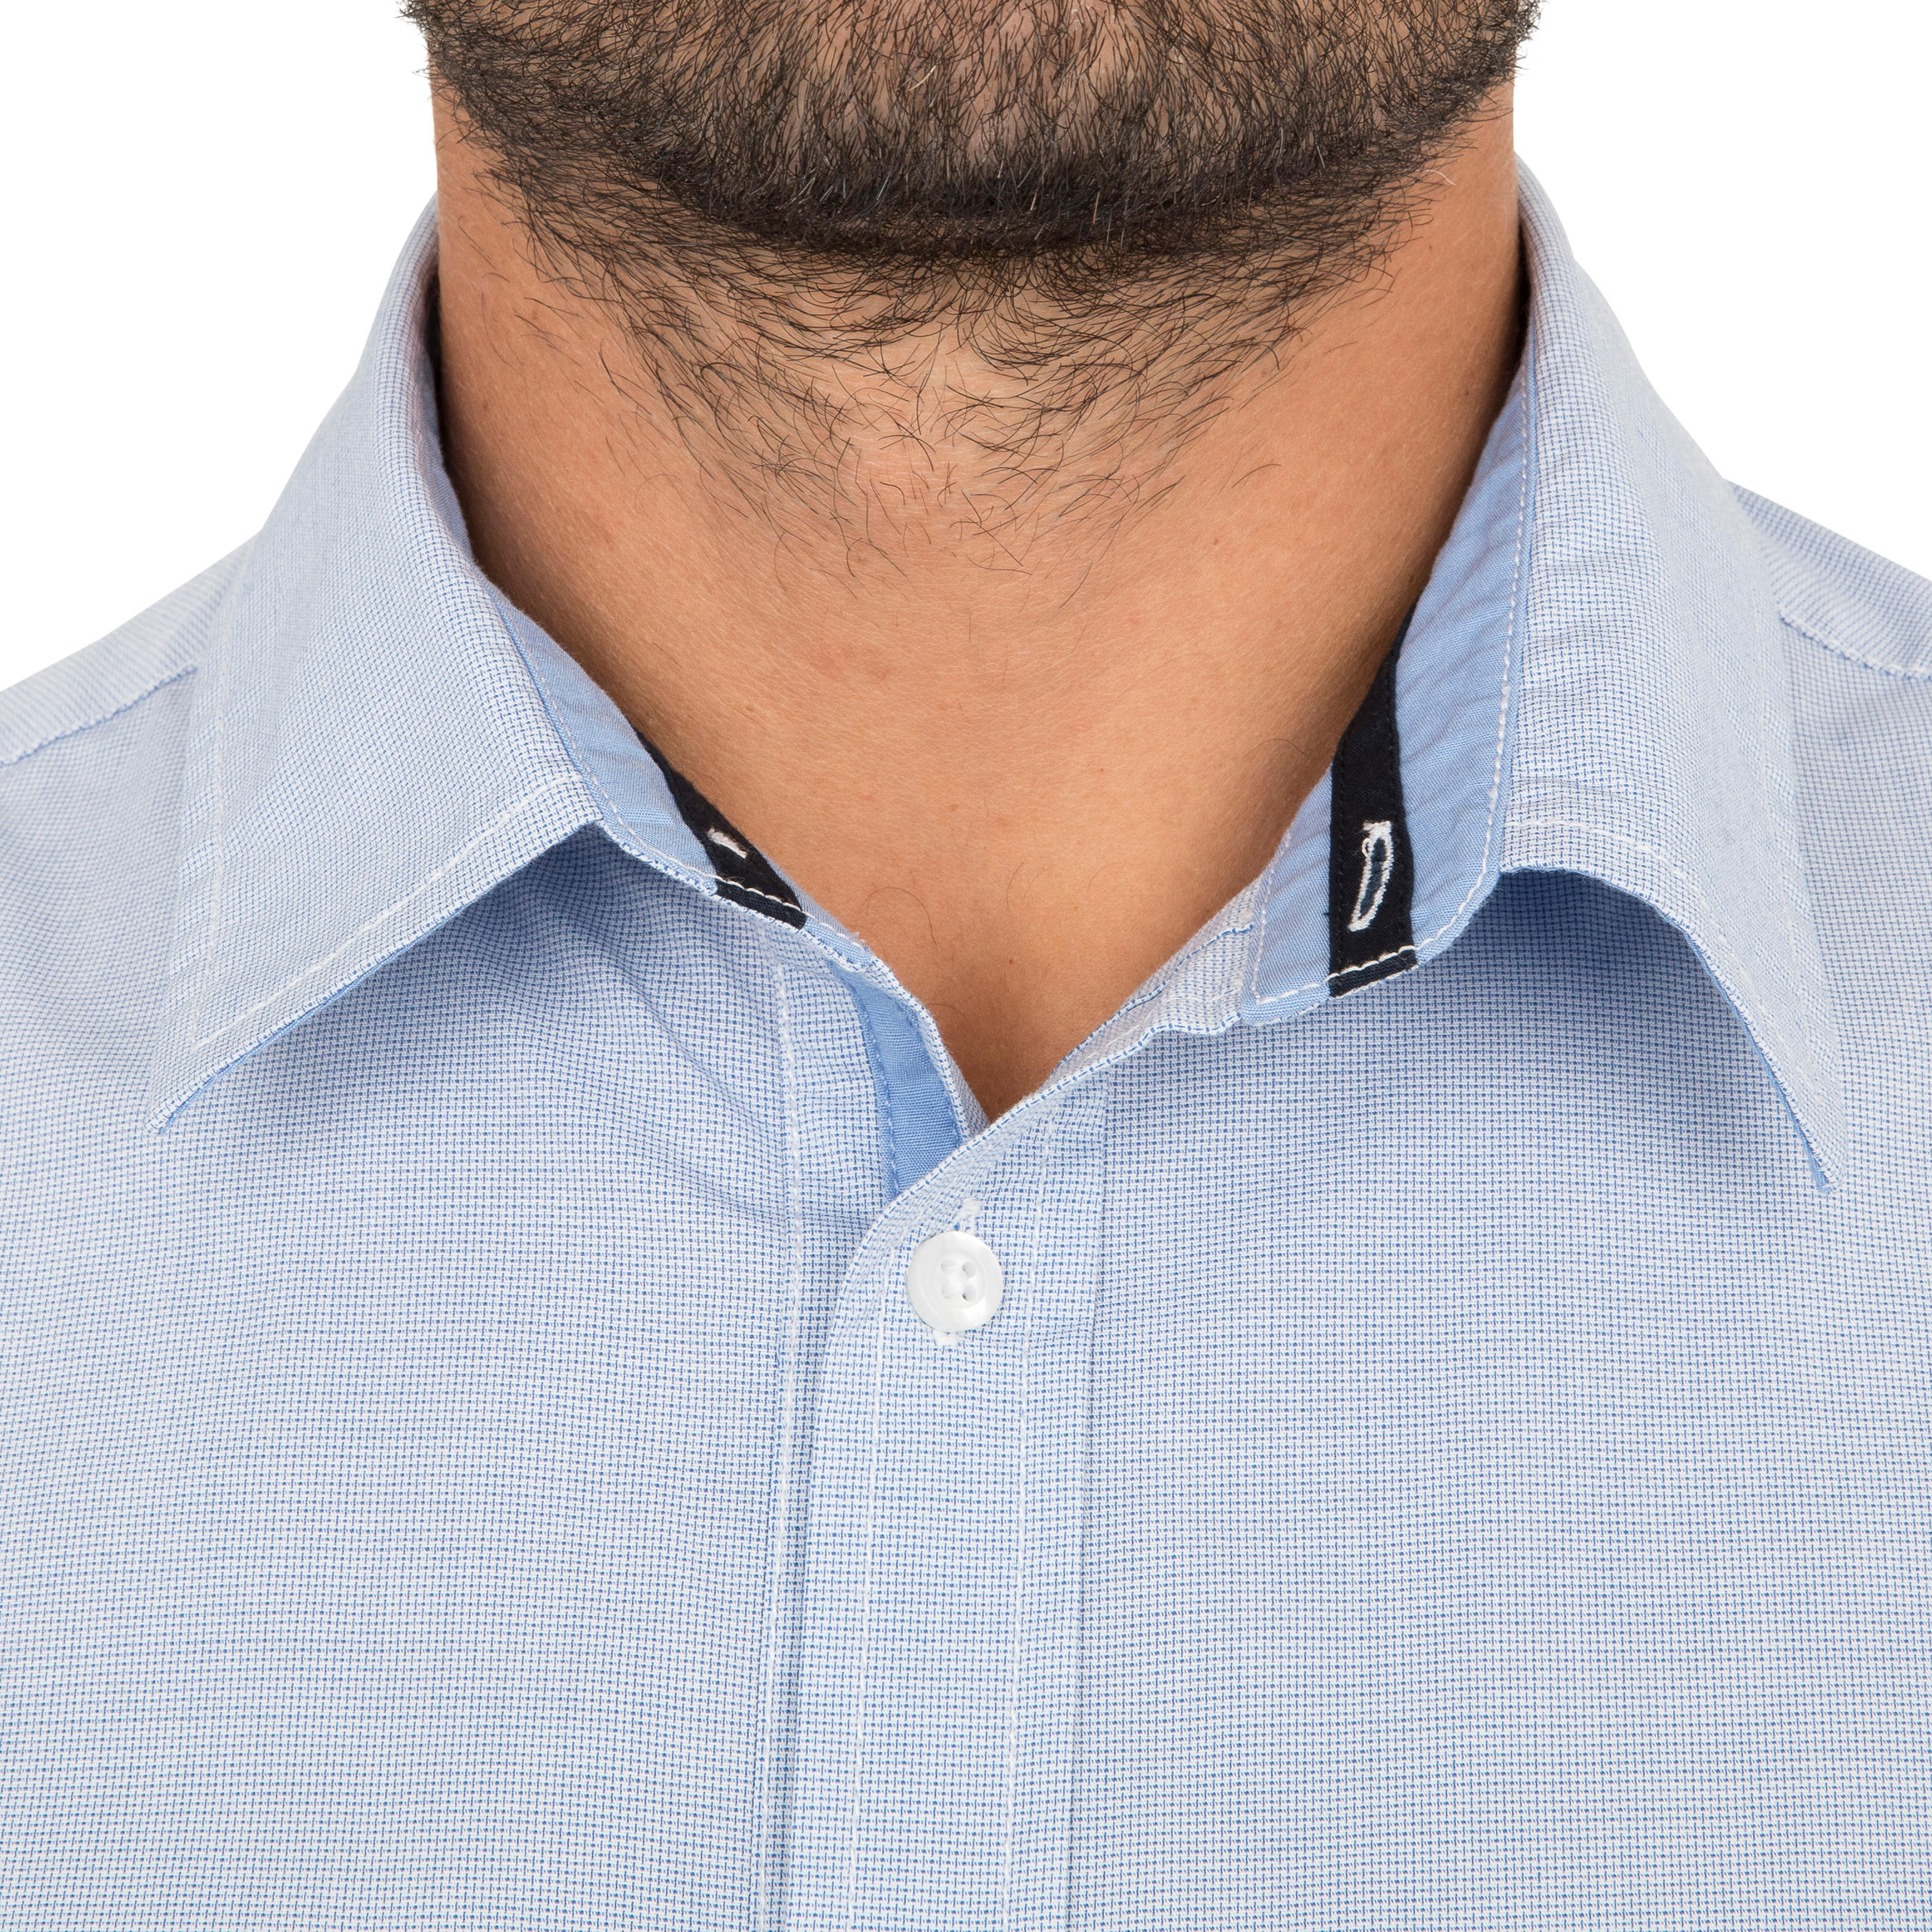 Men's sailing shirt 100 - blue 6/8